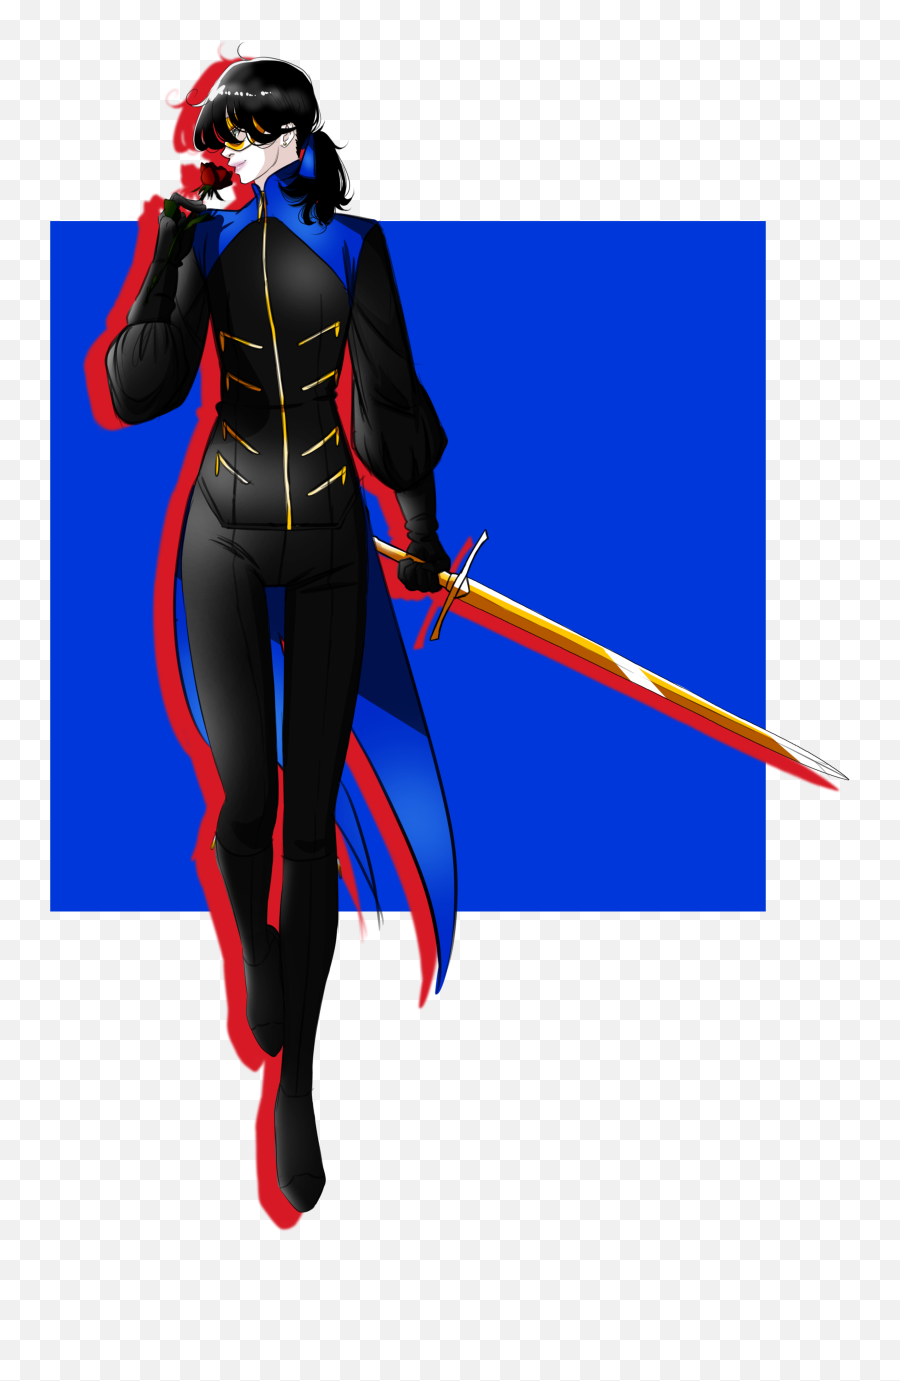 Persona 5 Oc - Kase Akimoto U2014 Weasyl Persona 3 Metaverse Outfits Png,Persona 5 Logo Png